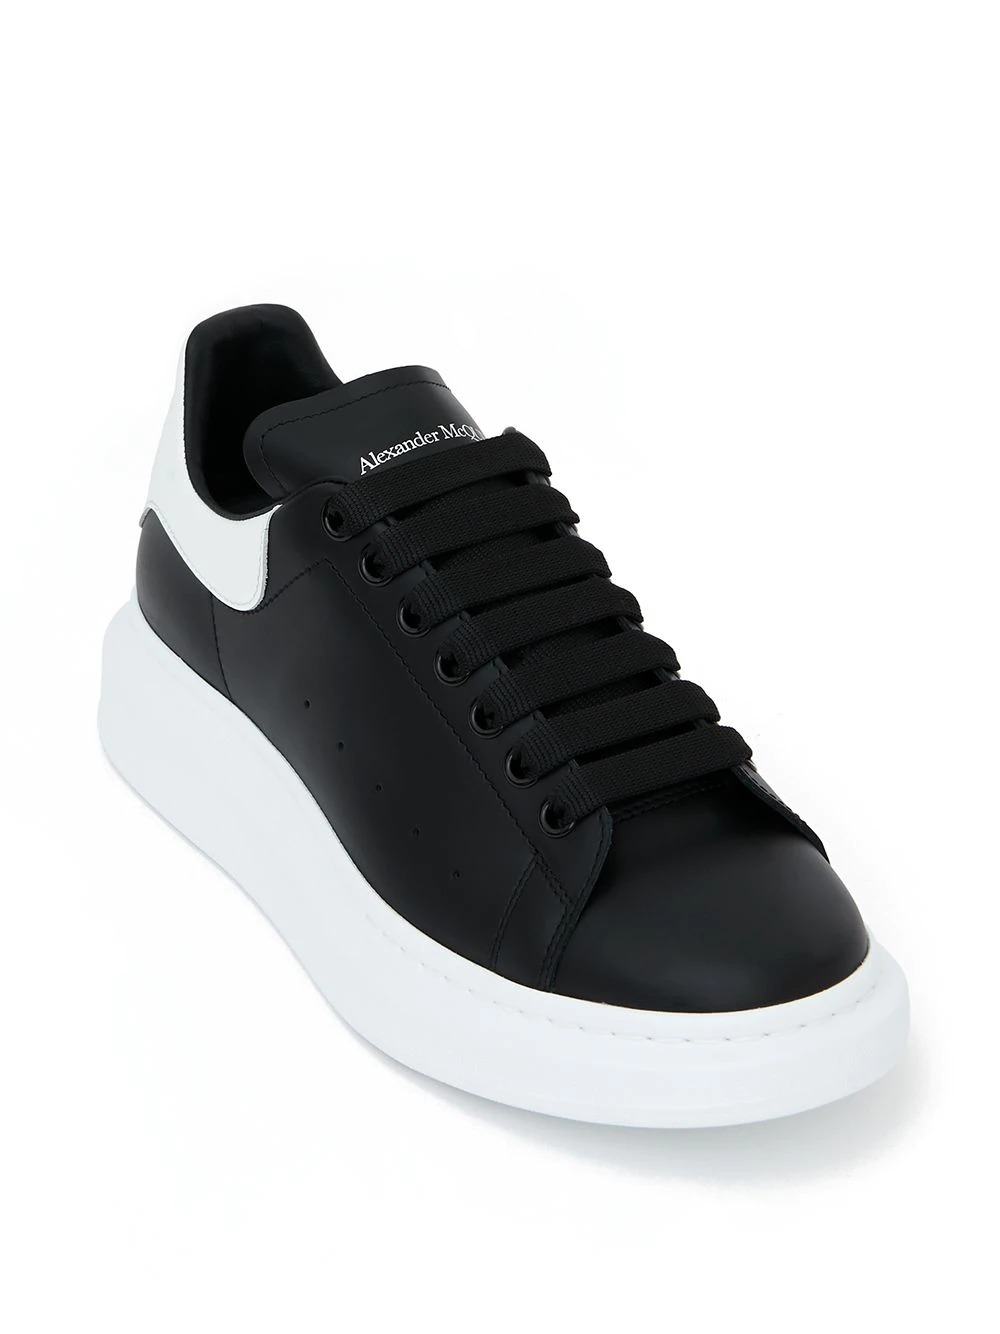 Black And White Oversized Sneakers - ALEXANDER MCQUEEN - Russocapri